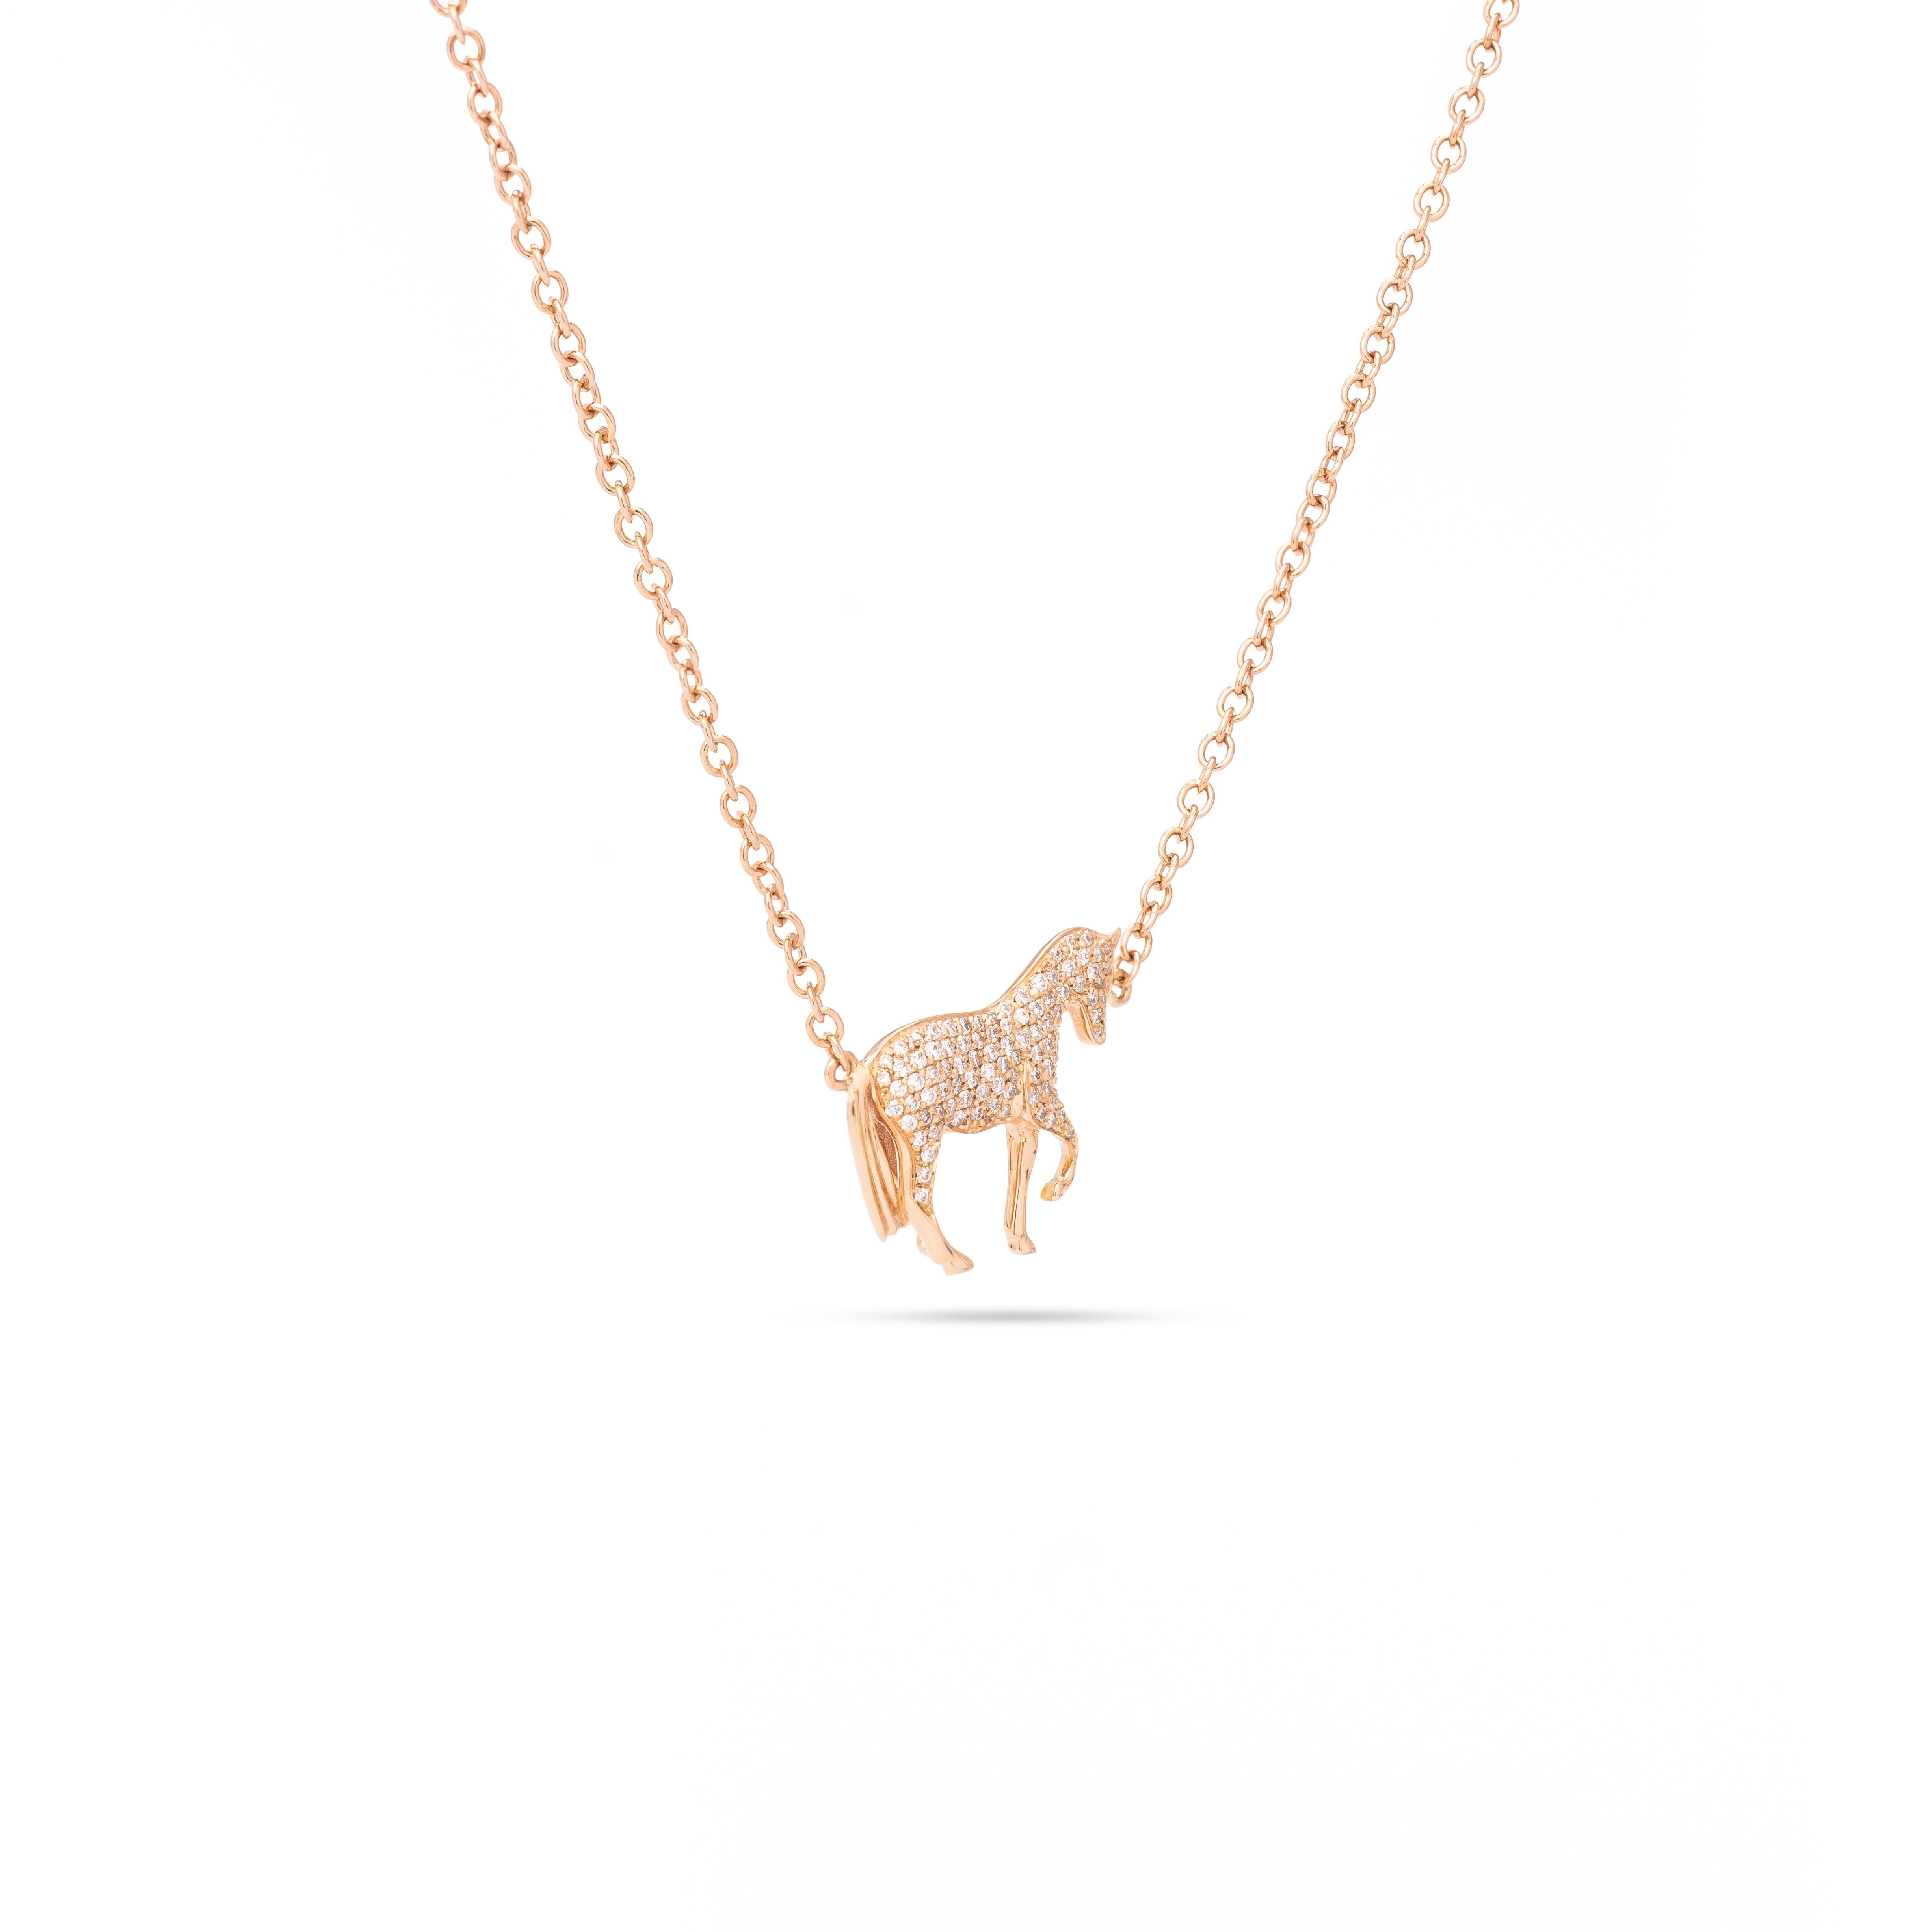 Artist Handmade 18kt Gold Diamonds Horse Pendant Necklace by Ubaldi Equestrian Jewelry